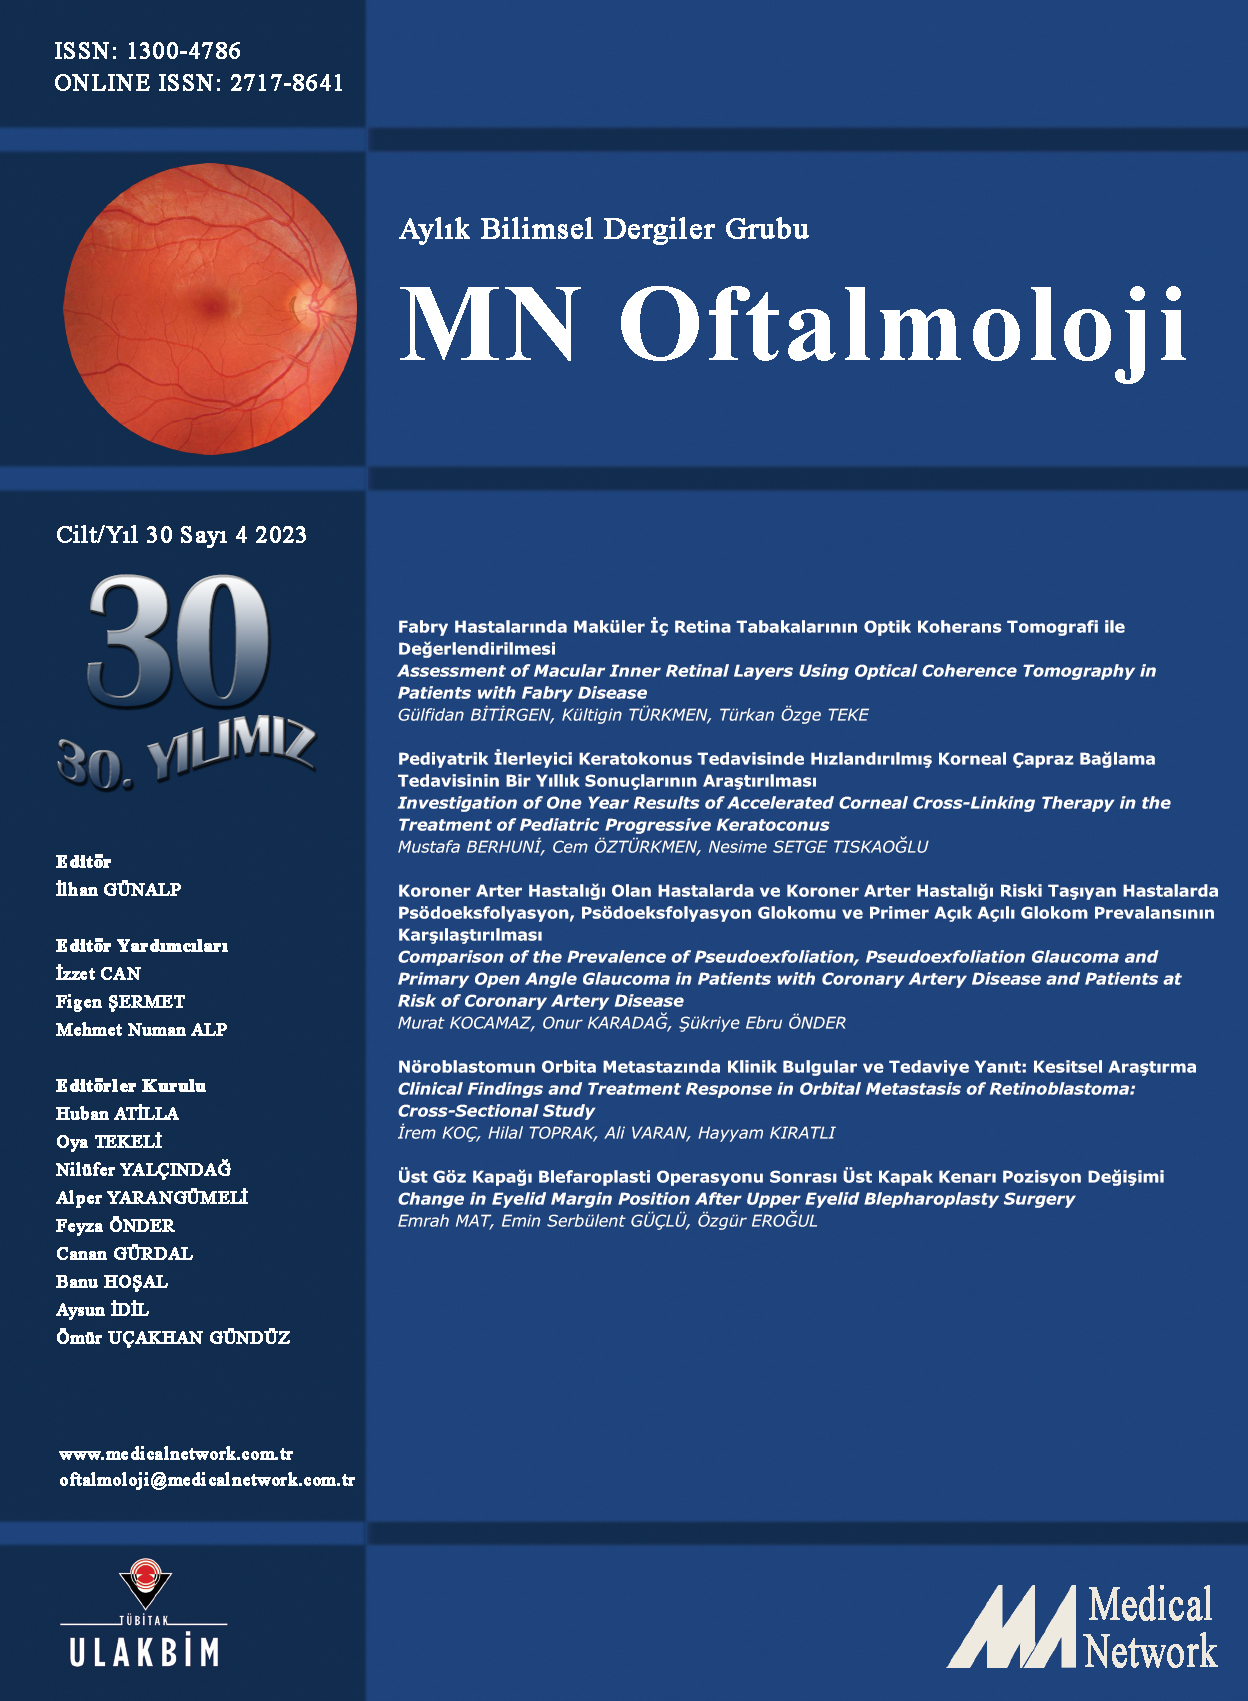 <p>MN Oftalmoloji Cilt: 30 Say: 4 2023 (MN Ophthalmology Volume: 30 No: 4 2023)</p>